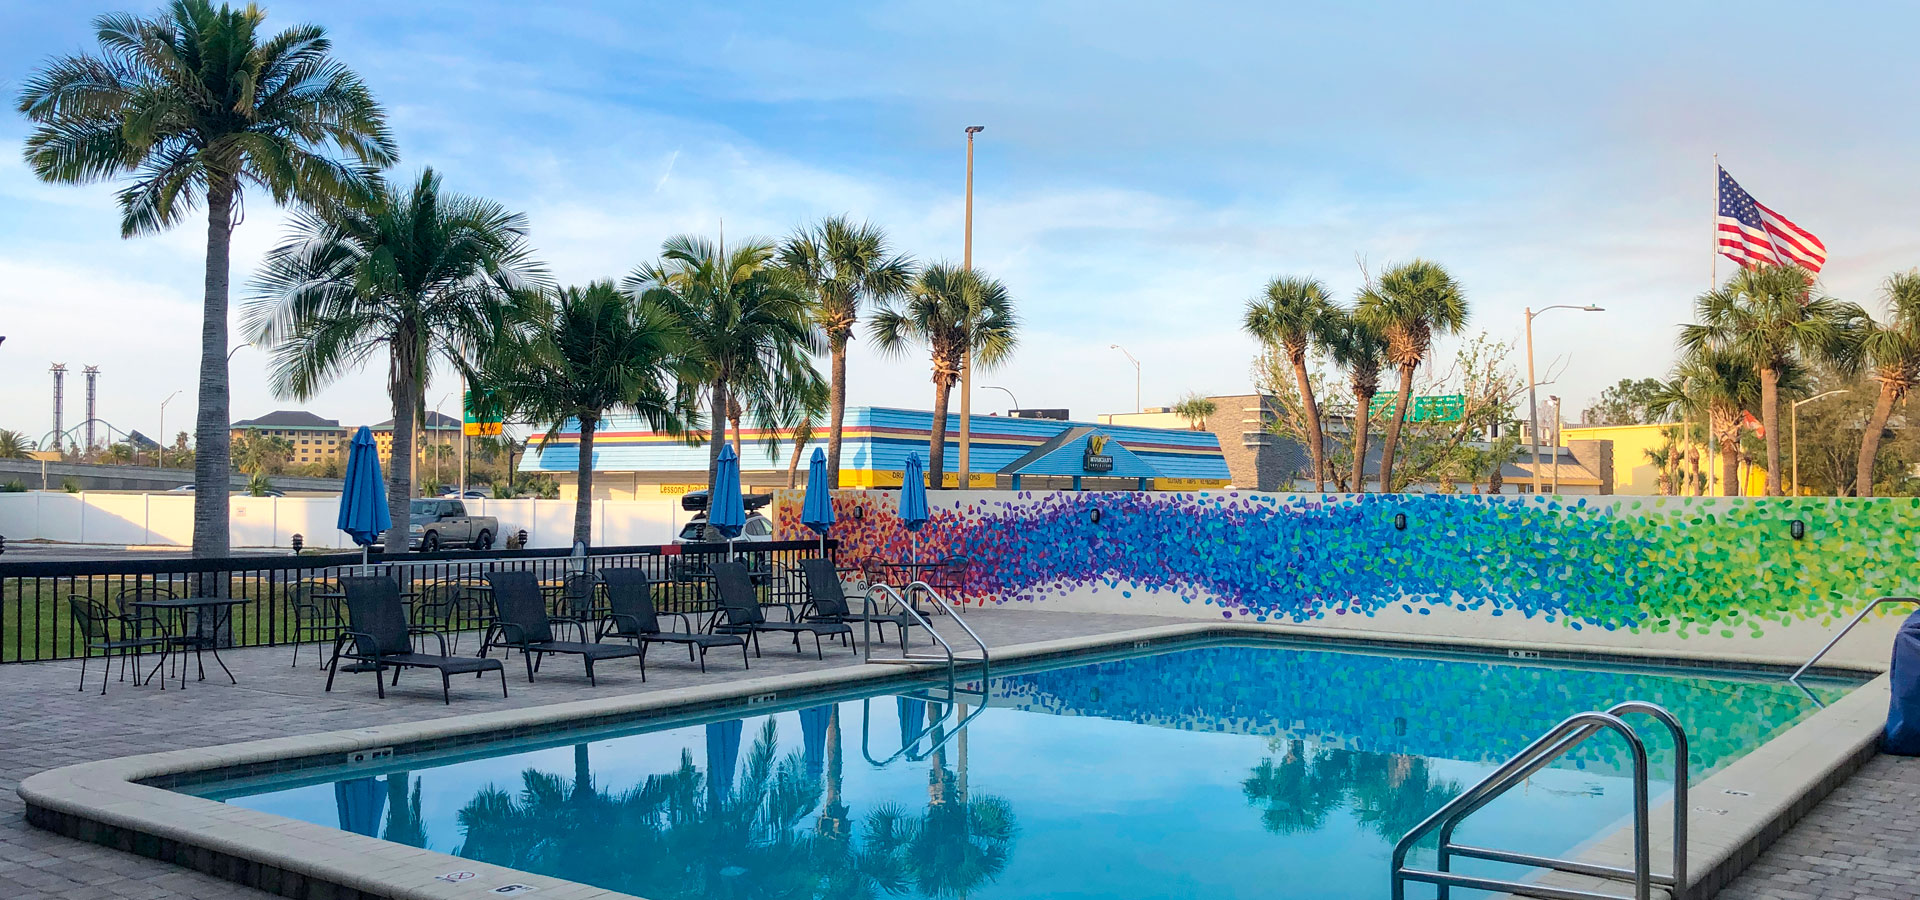 Pool Hotel Monreale Express I-drive Orlando